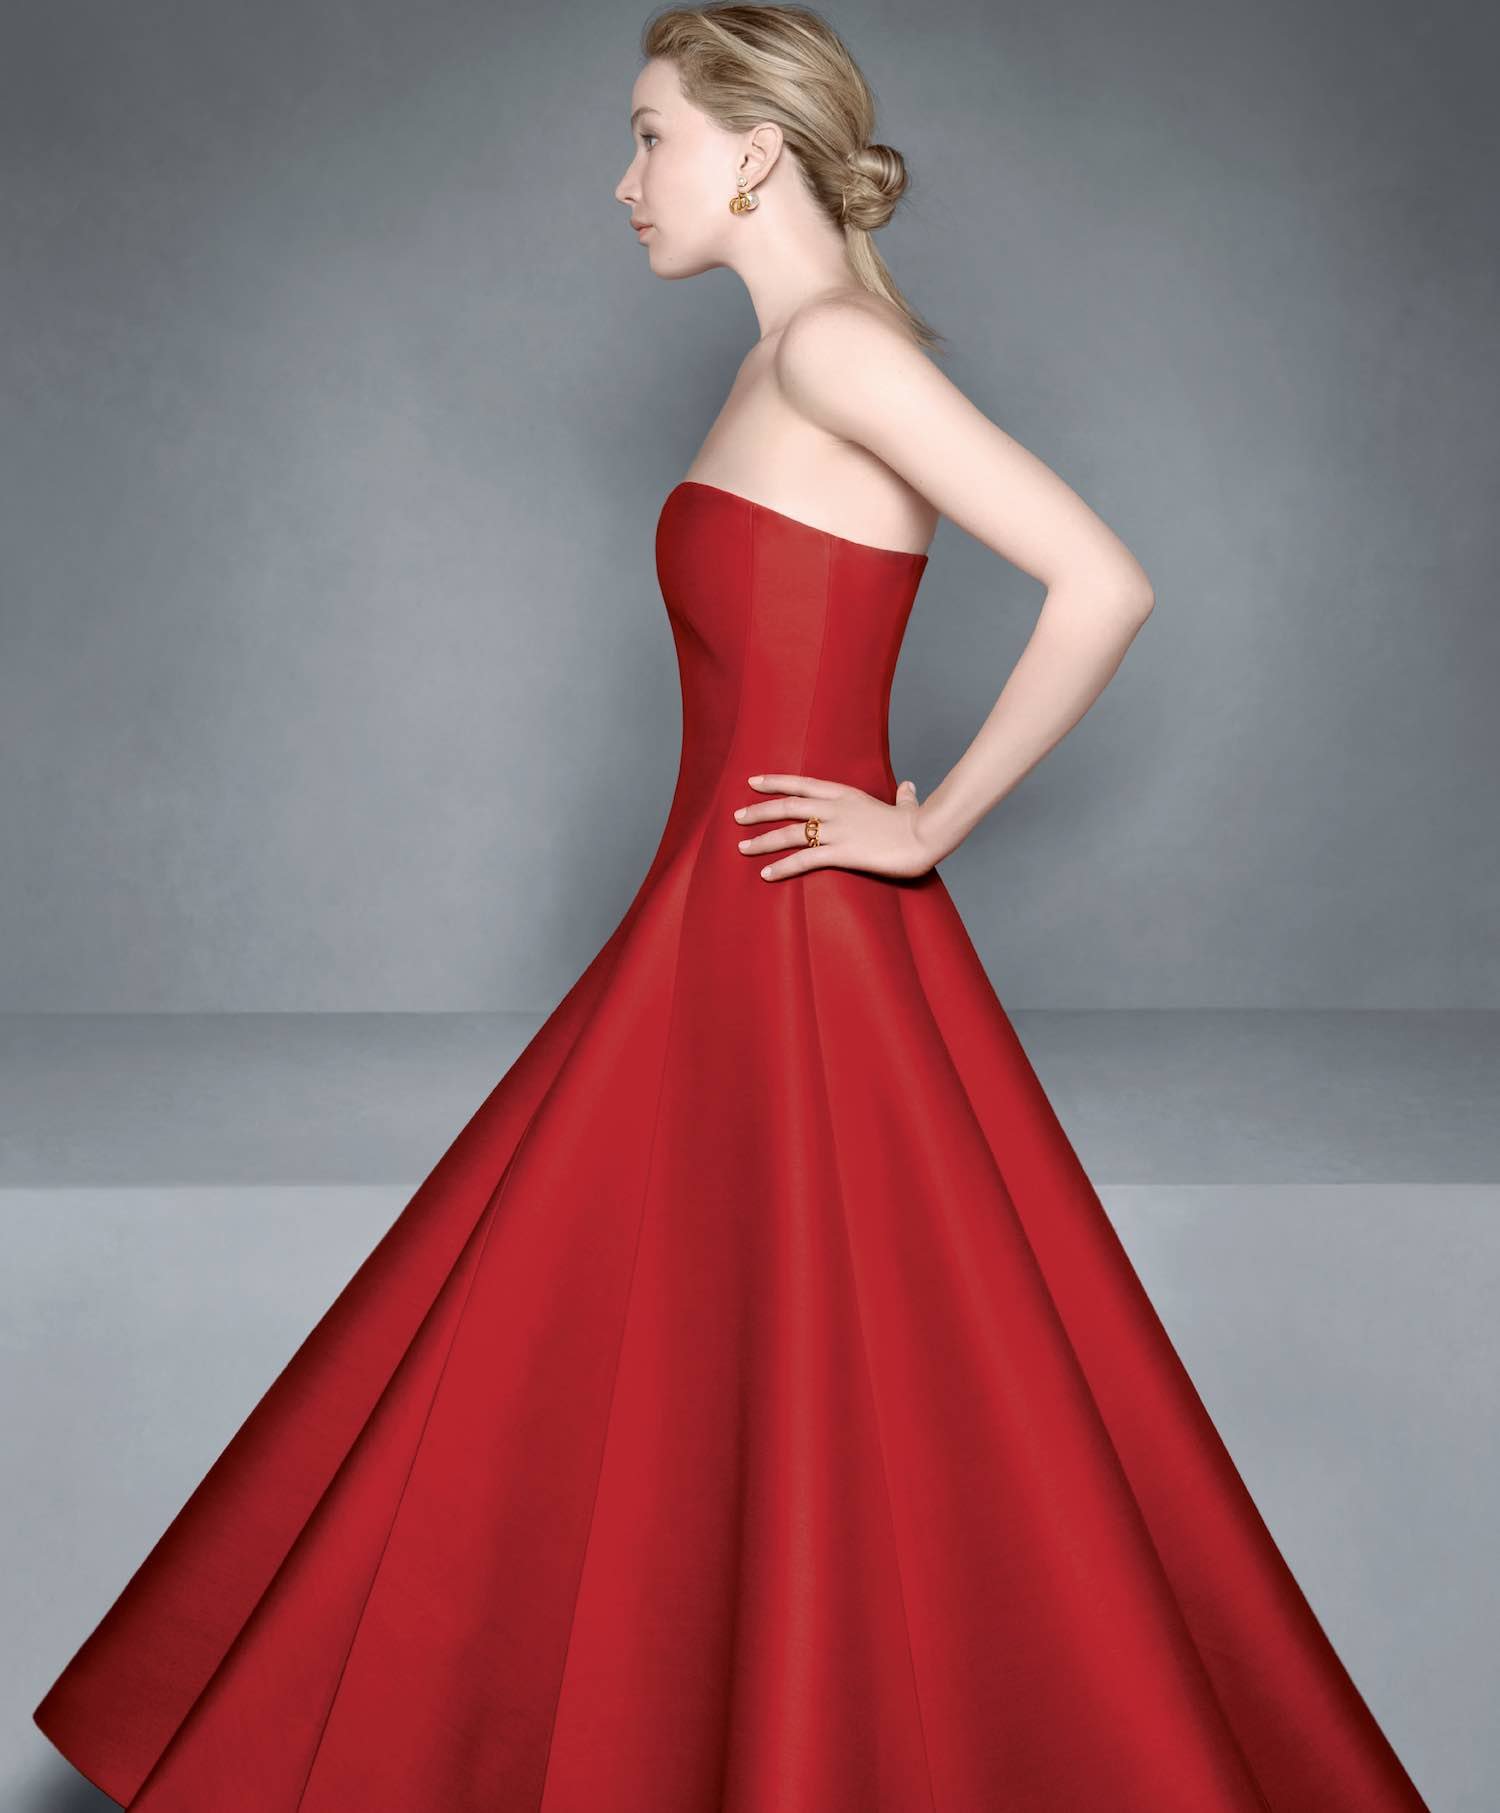 Dior Jennifer Lawrence